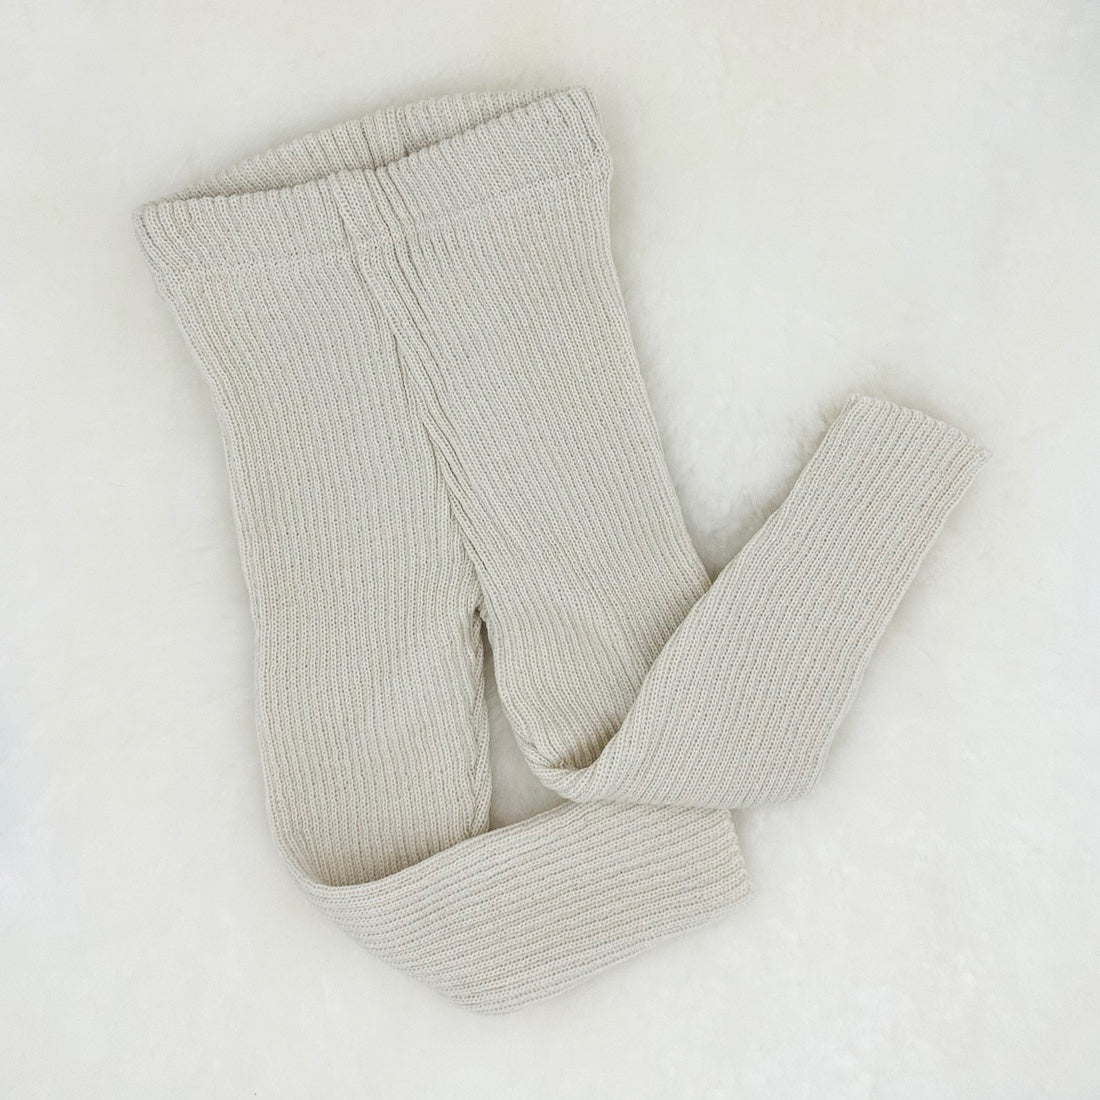 Children's soft cotton jersey knit tights - Natural white